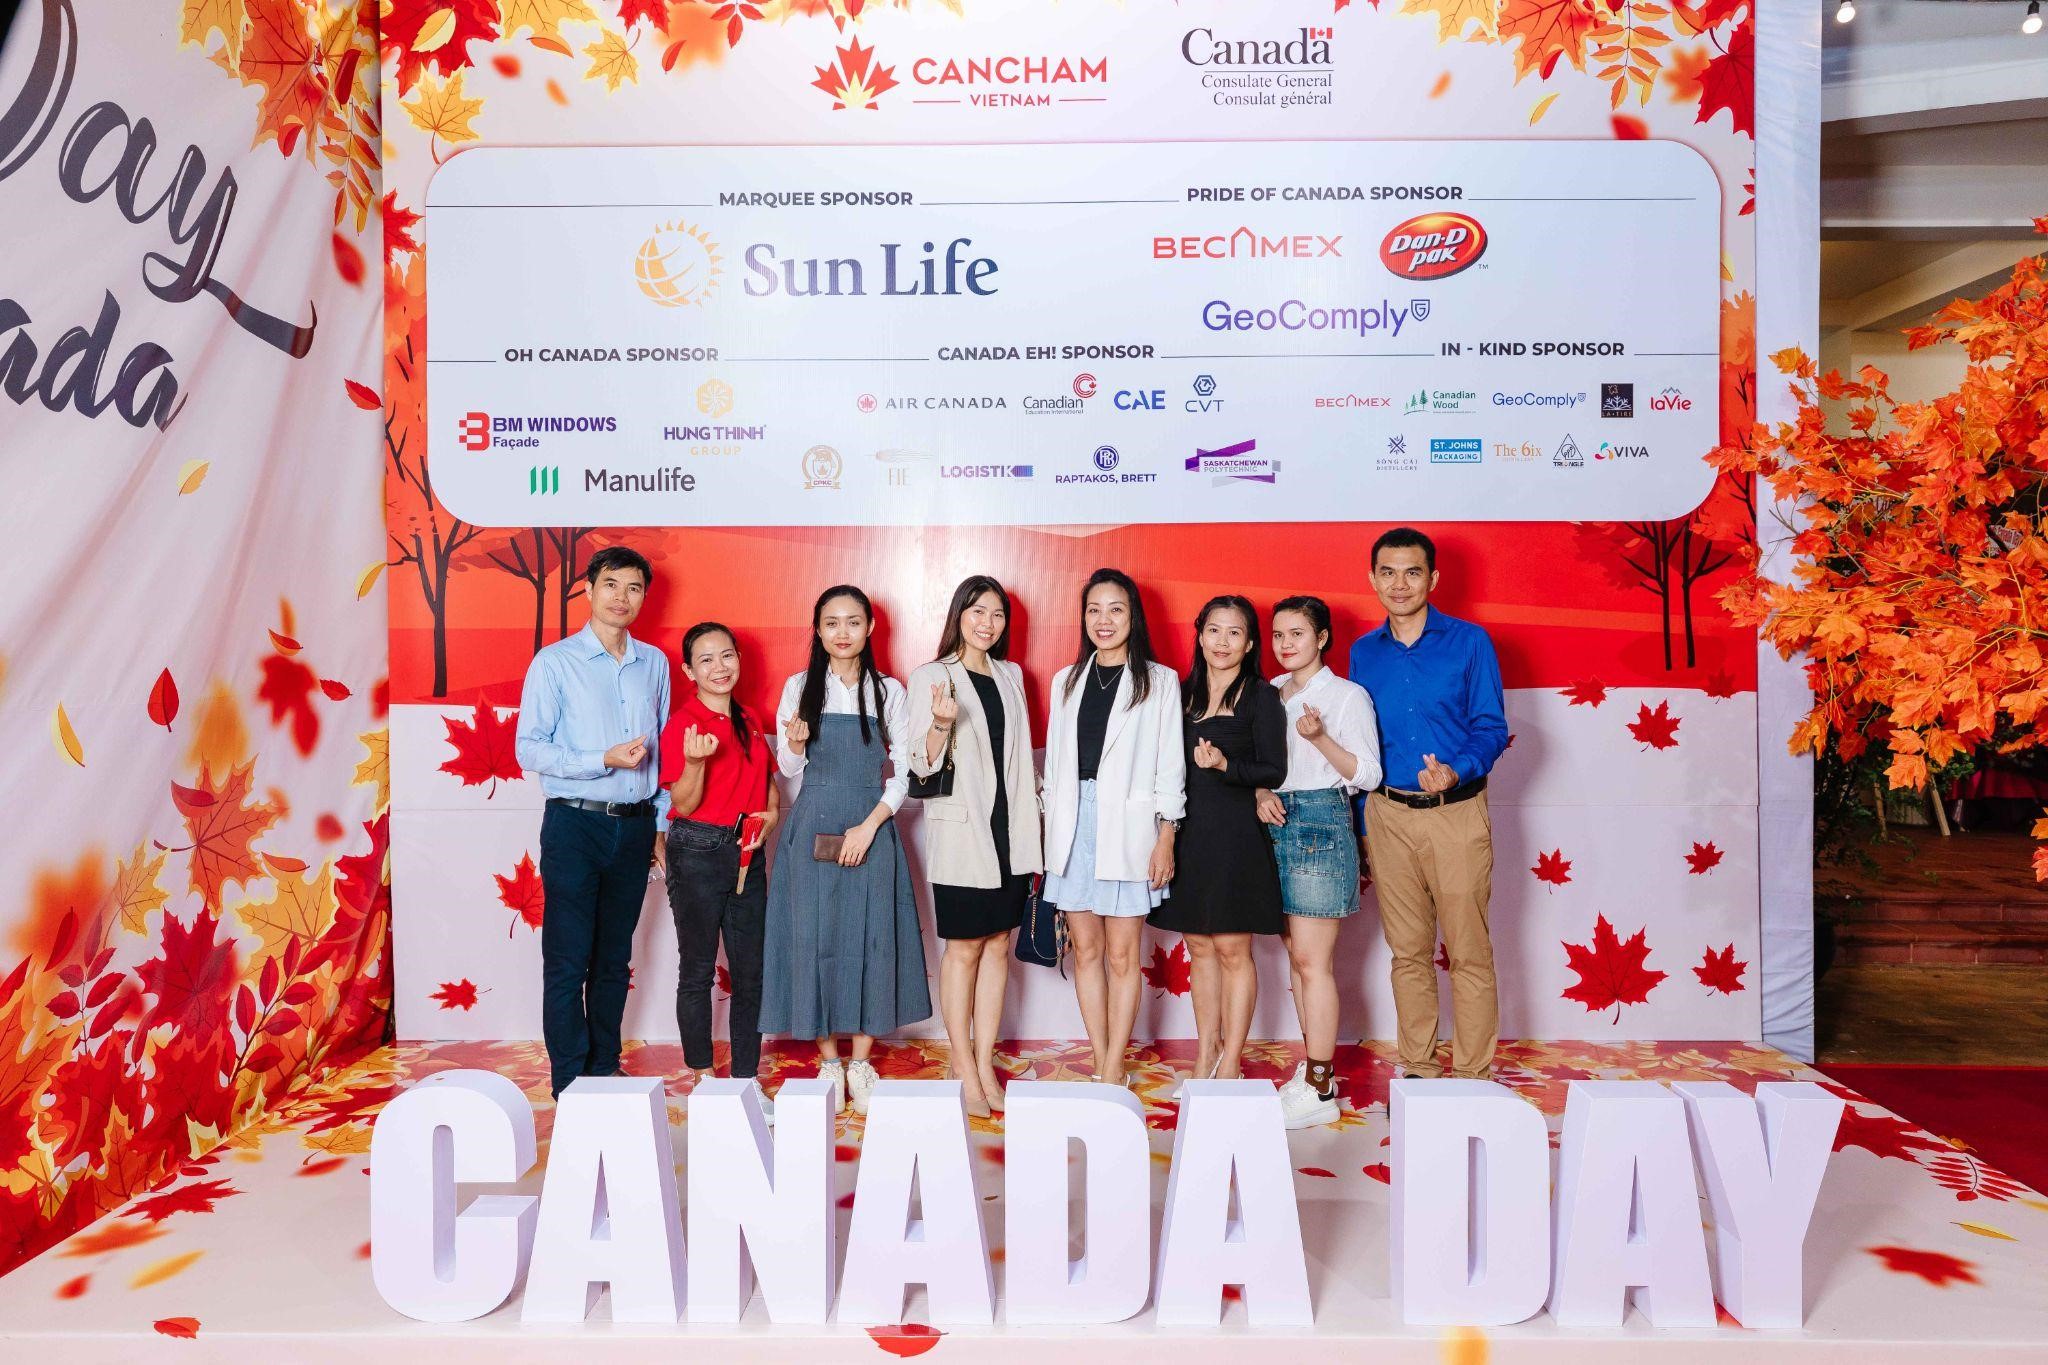 Dan On Corporation Proudly Sponsors Canada Day Celebration